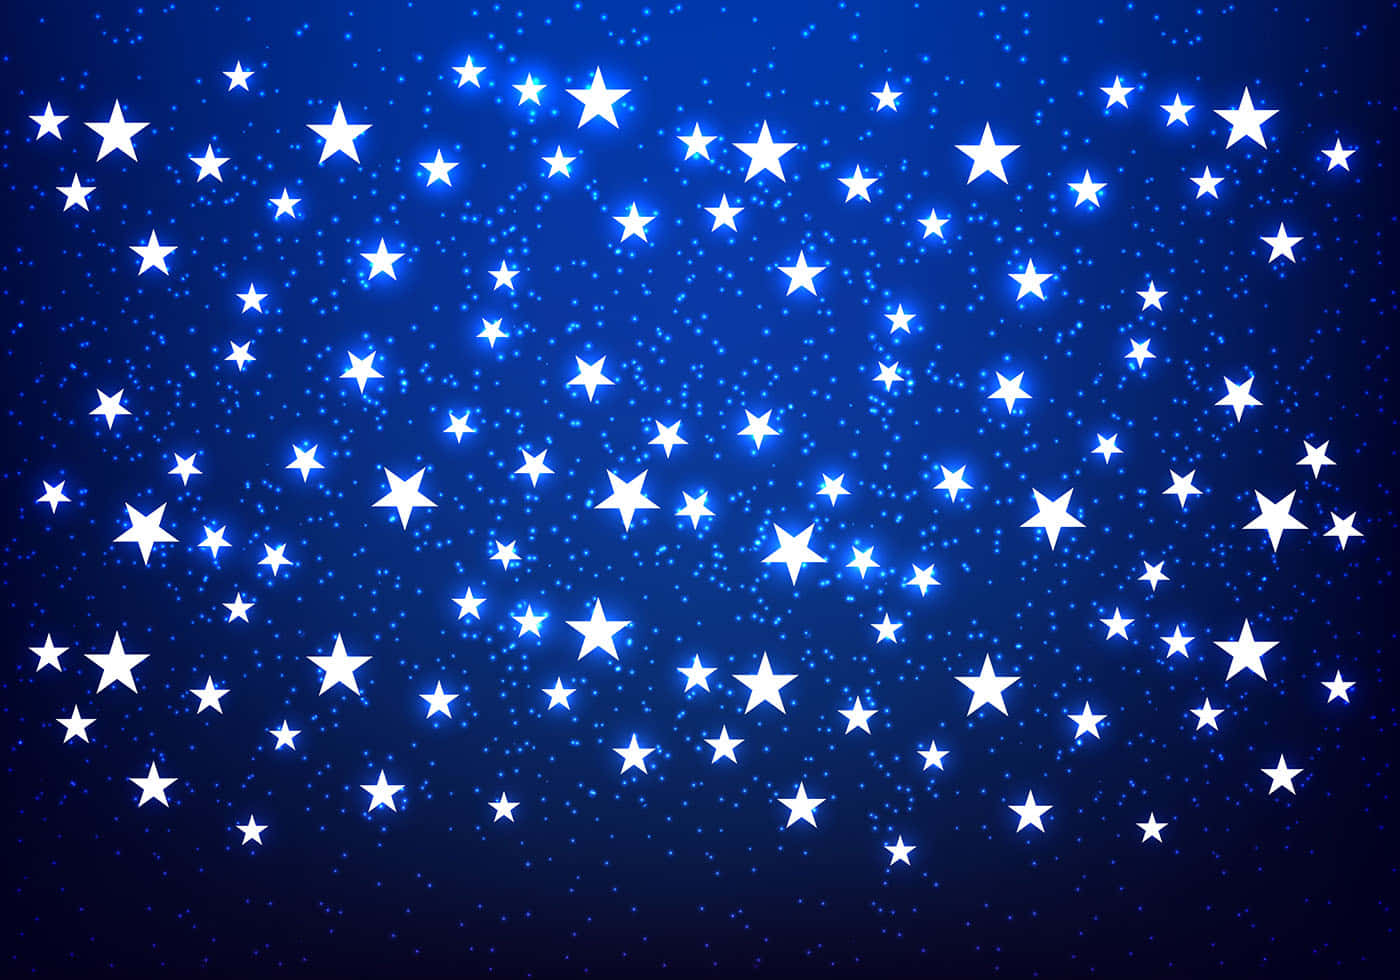 Enchanting Blue Stars in the Galaxy